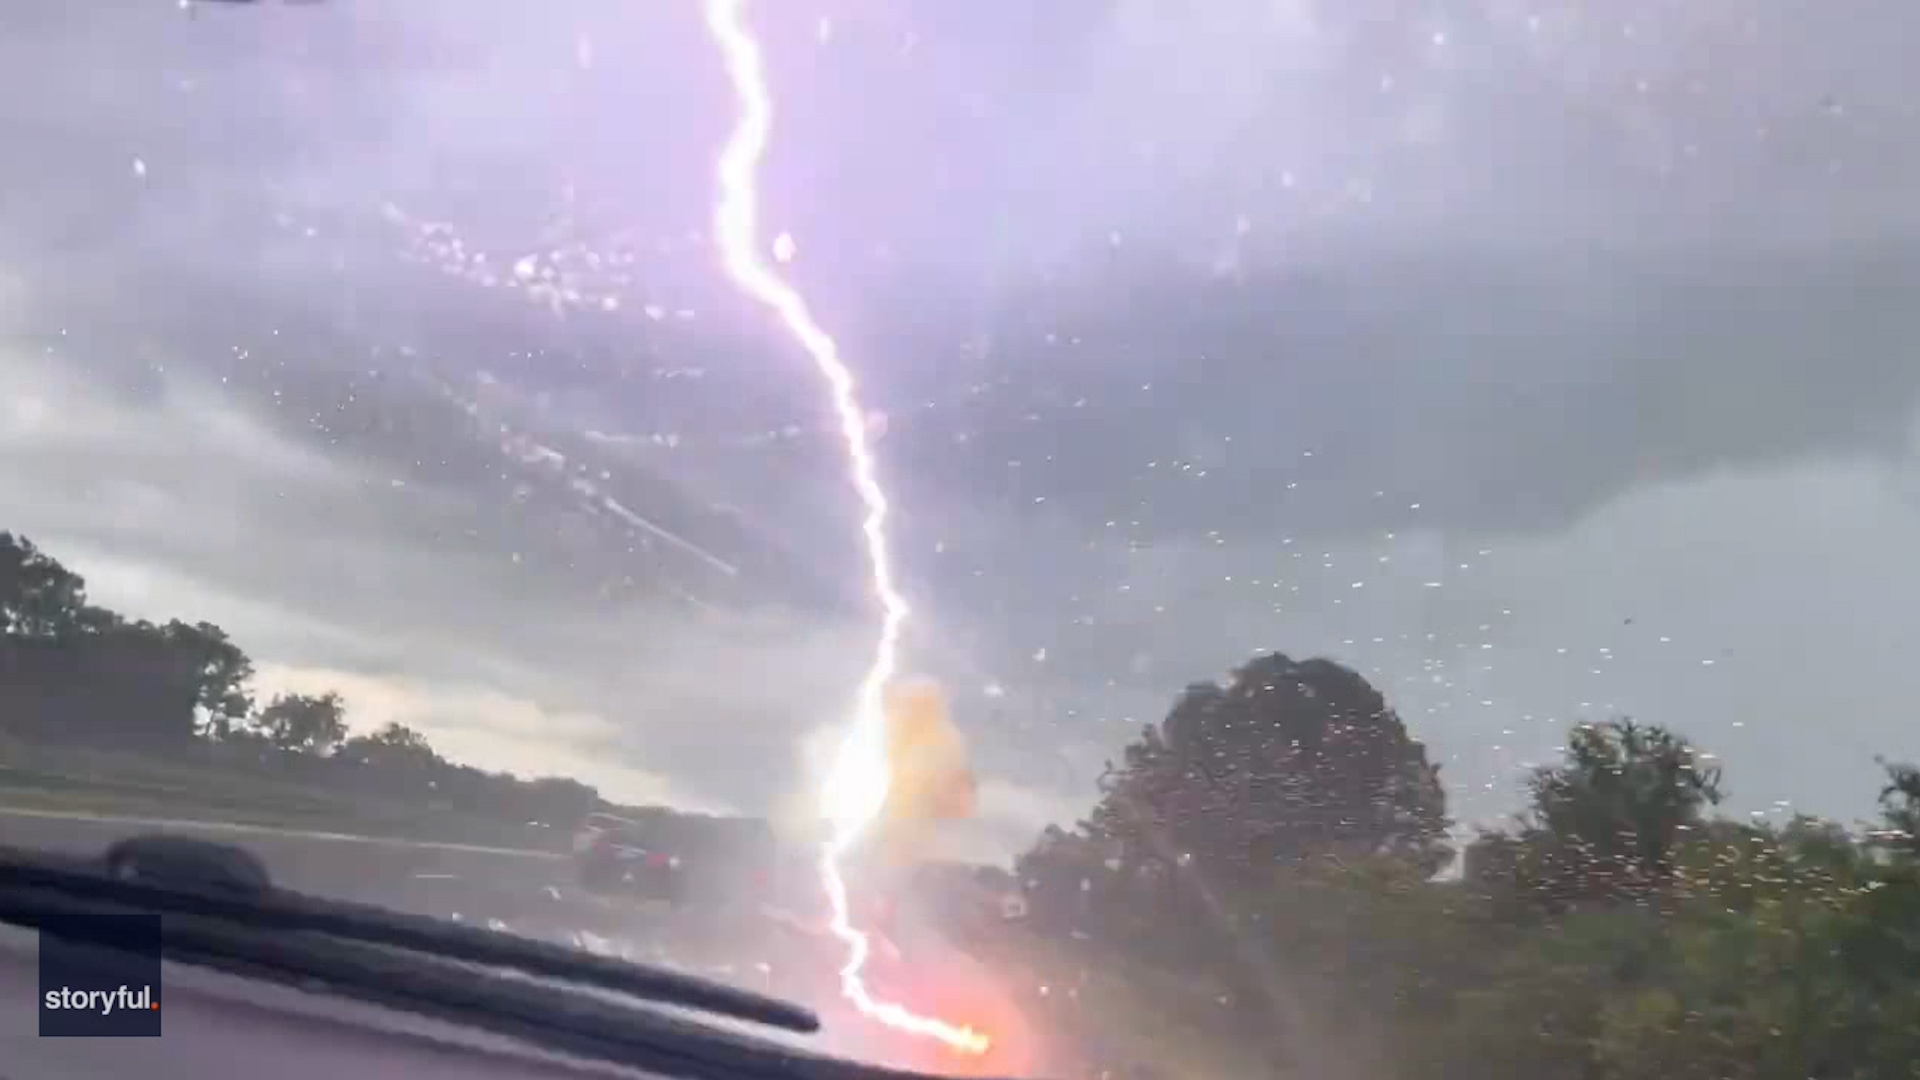 Video captures intense lightning bolt hitting car - The Washington Post